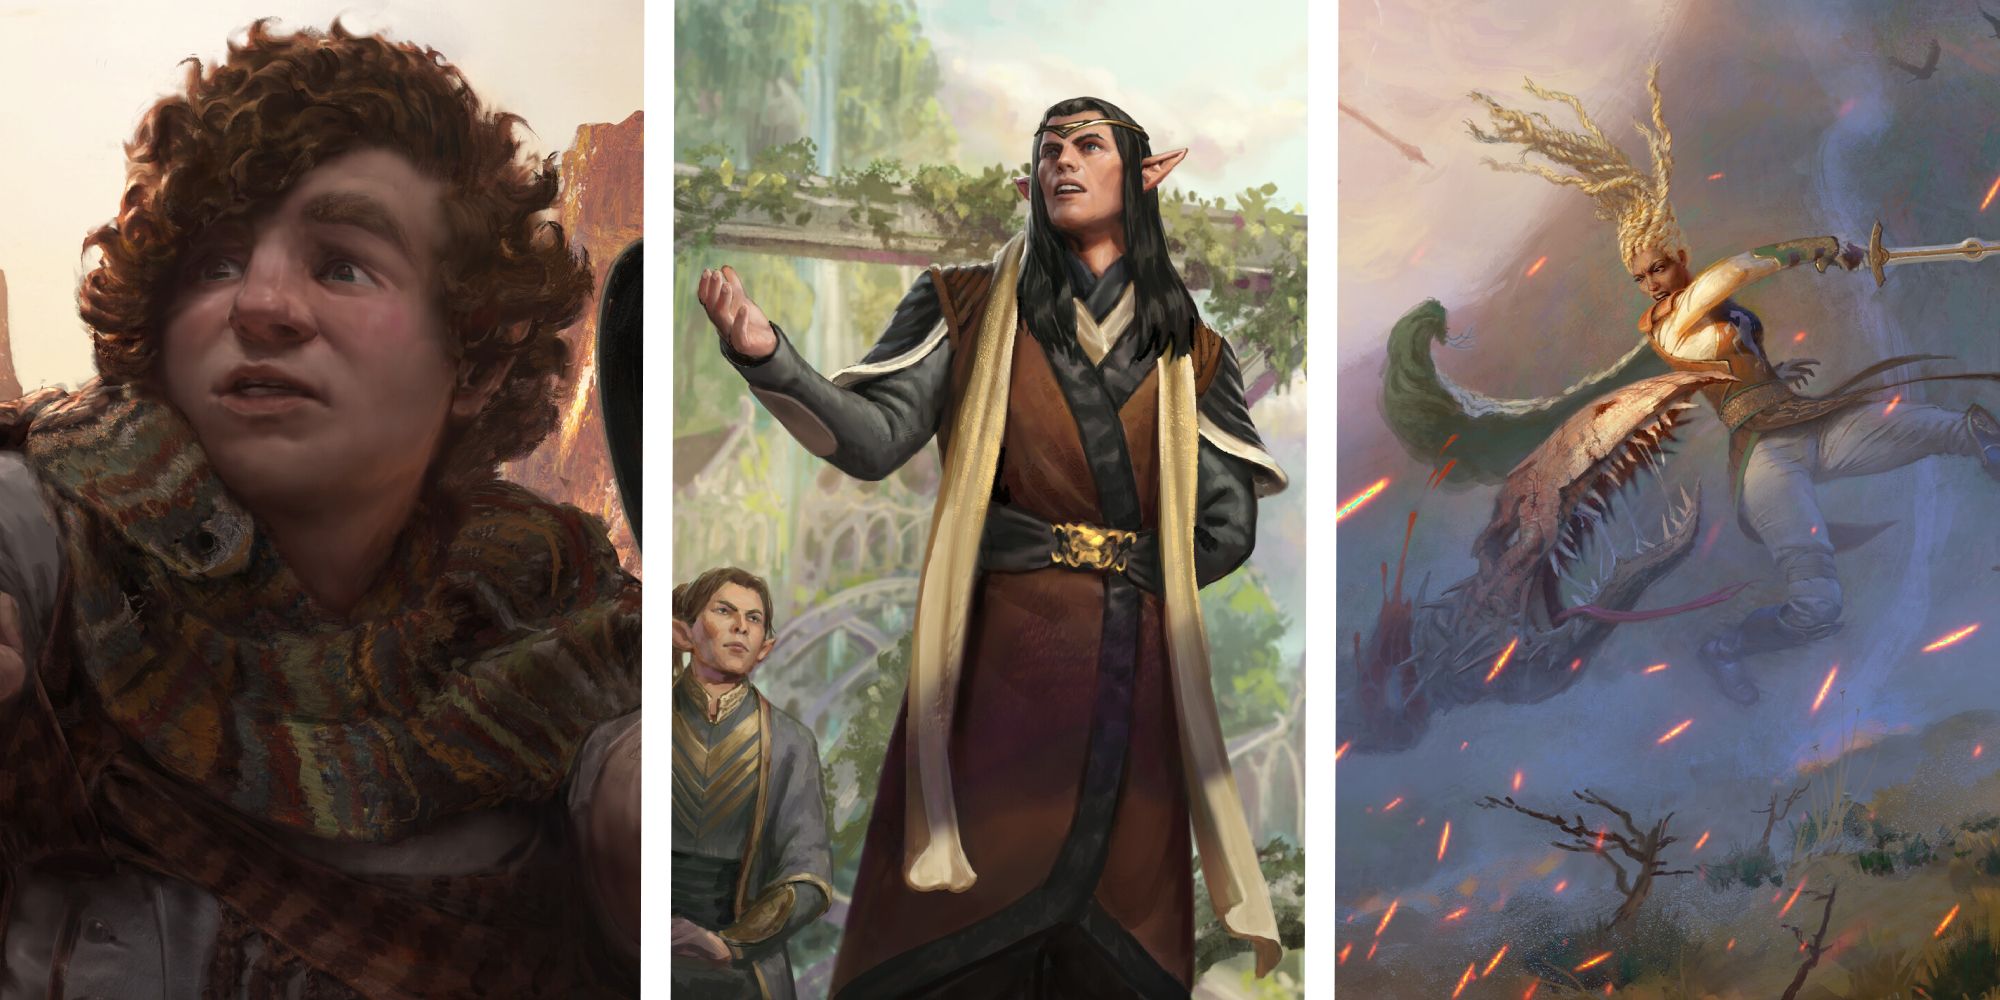 Upgrading Commander Precon: Riders of Rohan (Éowyn, Shieldmaiden)